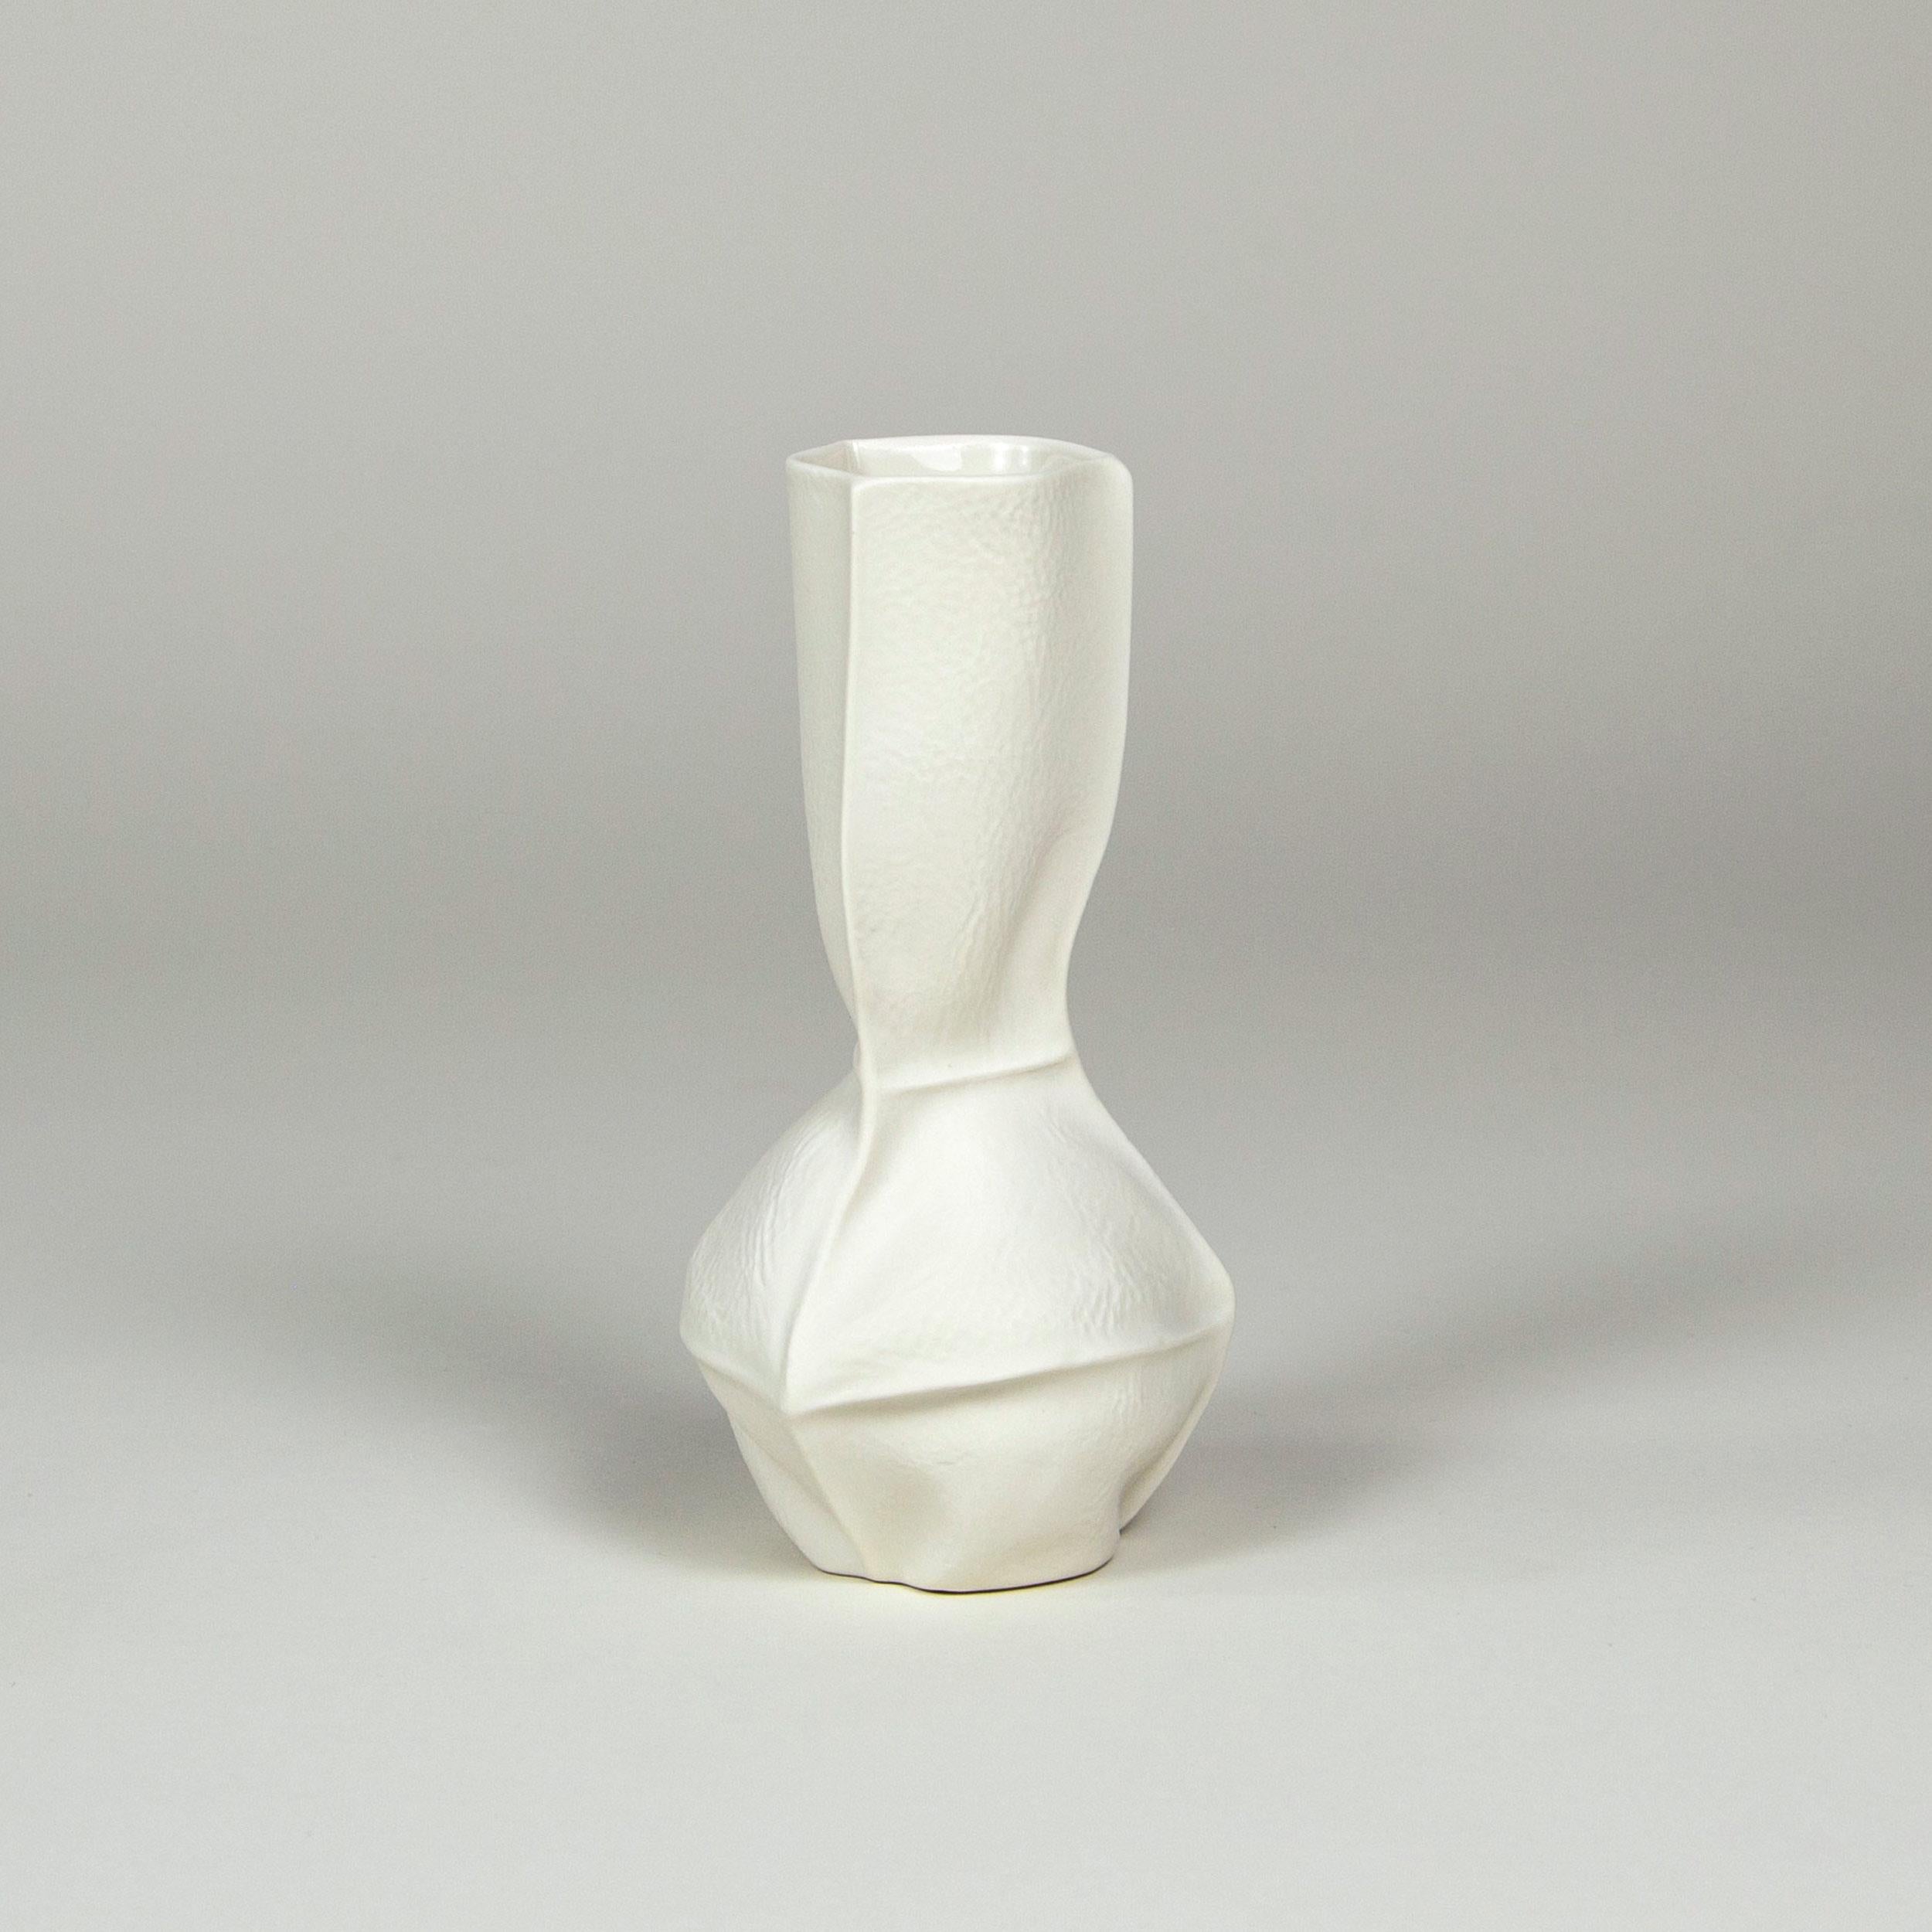 In stock, Ceramic White Kawa Vase, Set of 5, organic porcelain vases 1